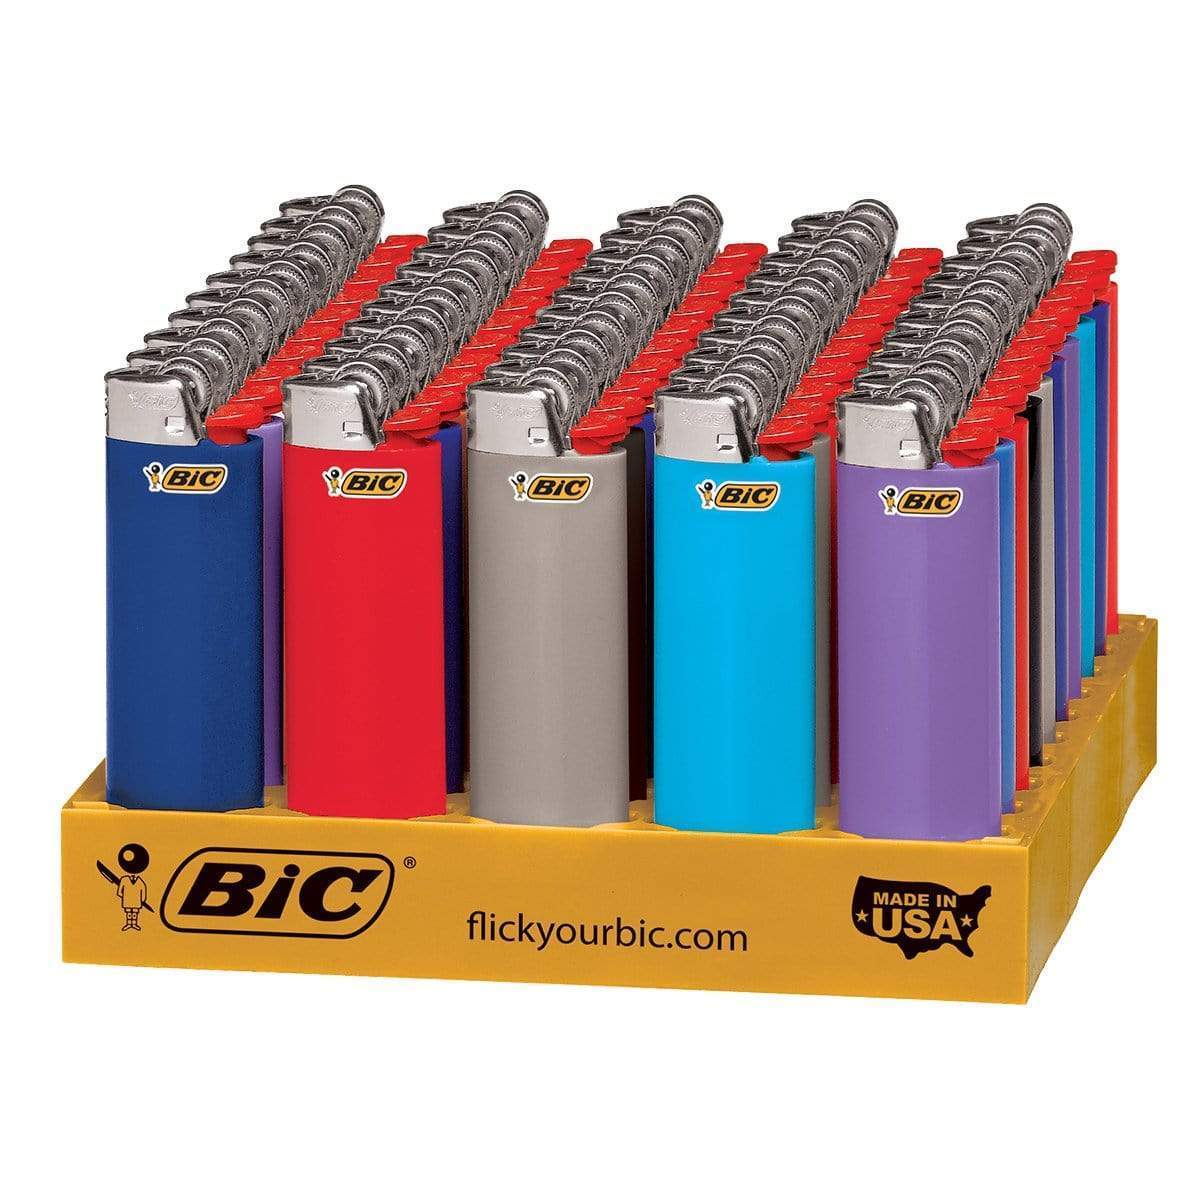 BIC Maxi lighters